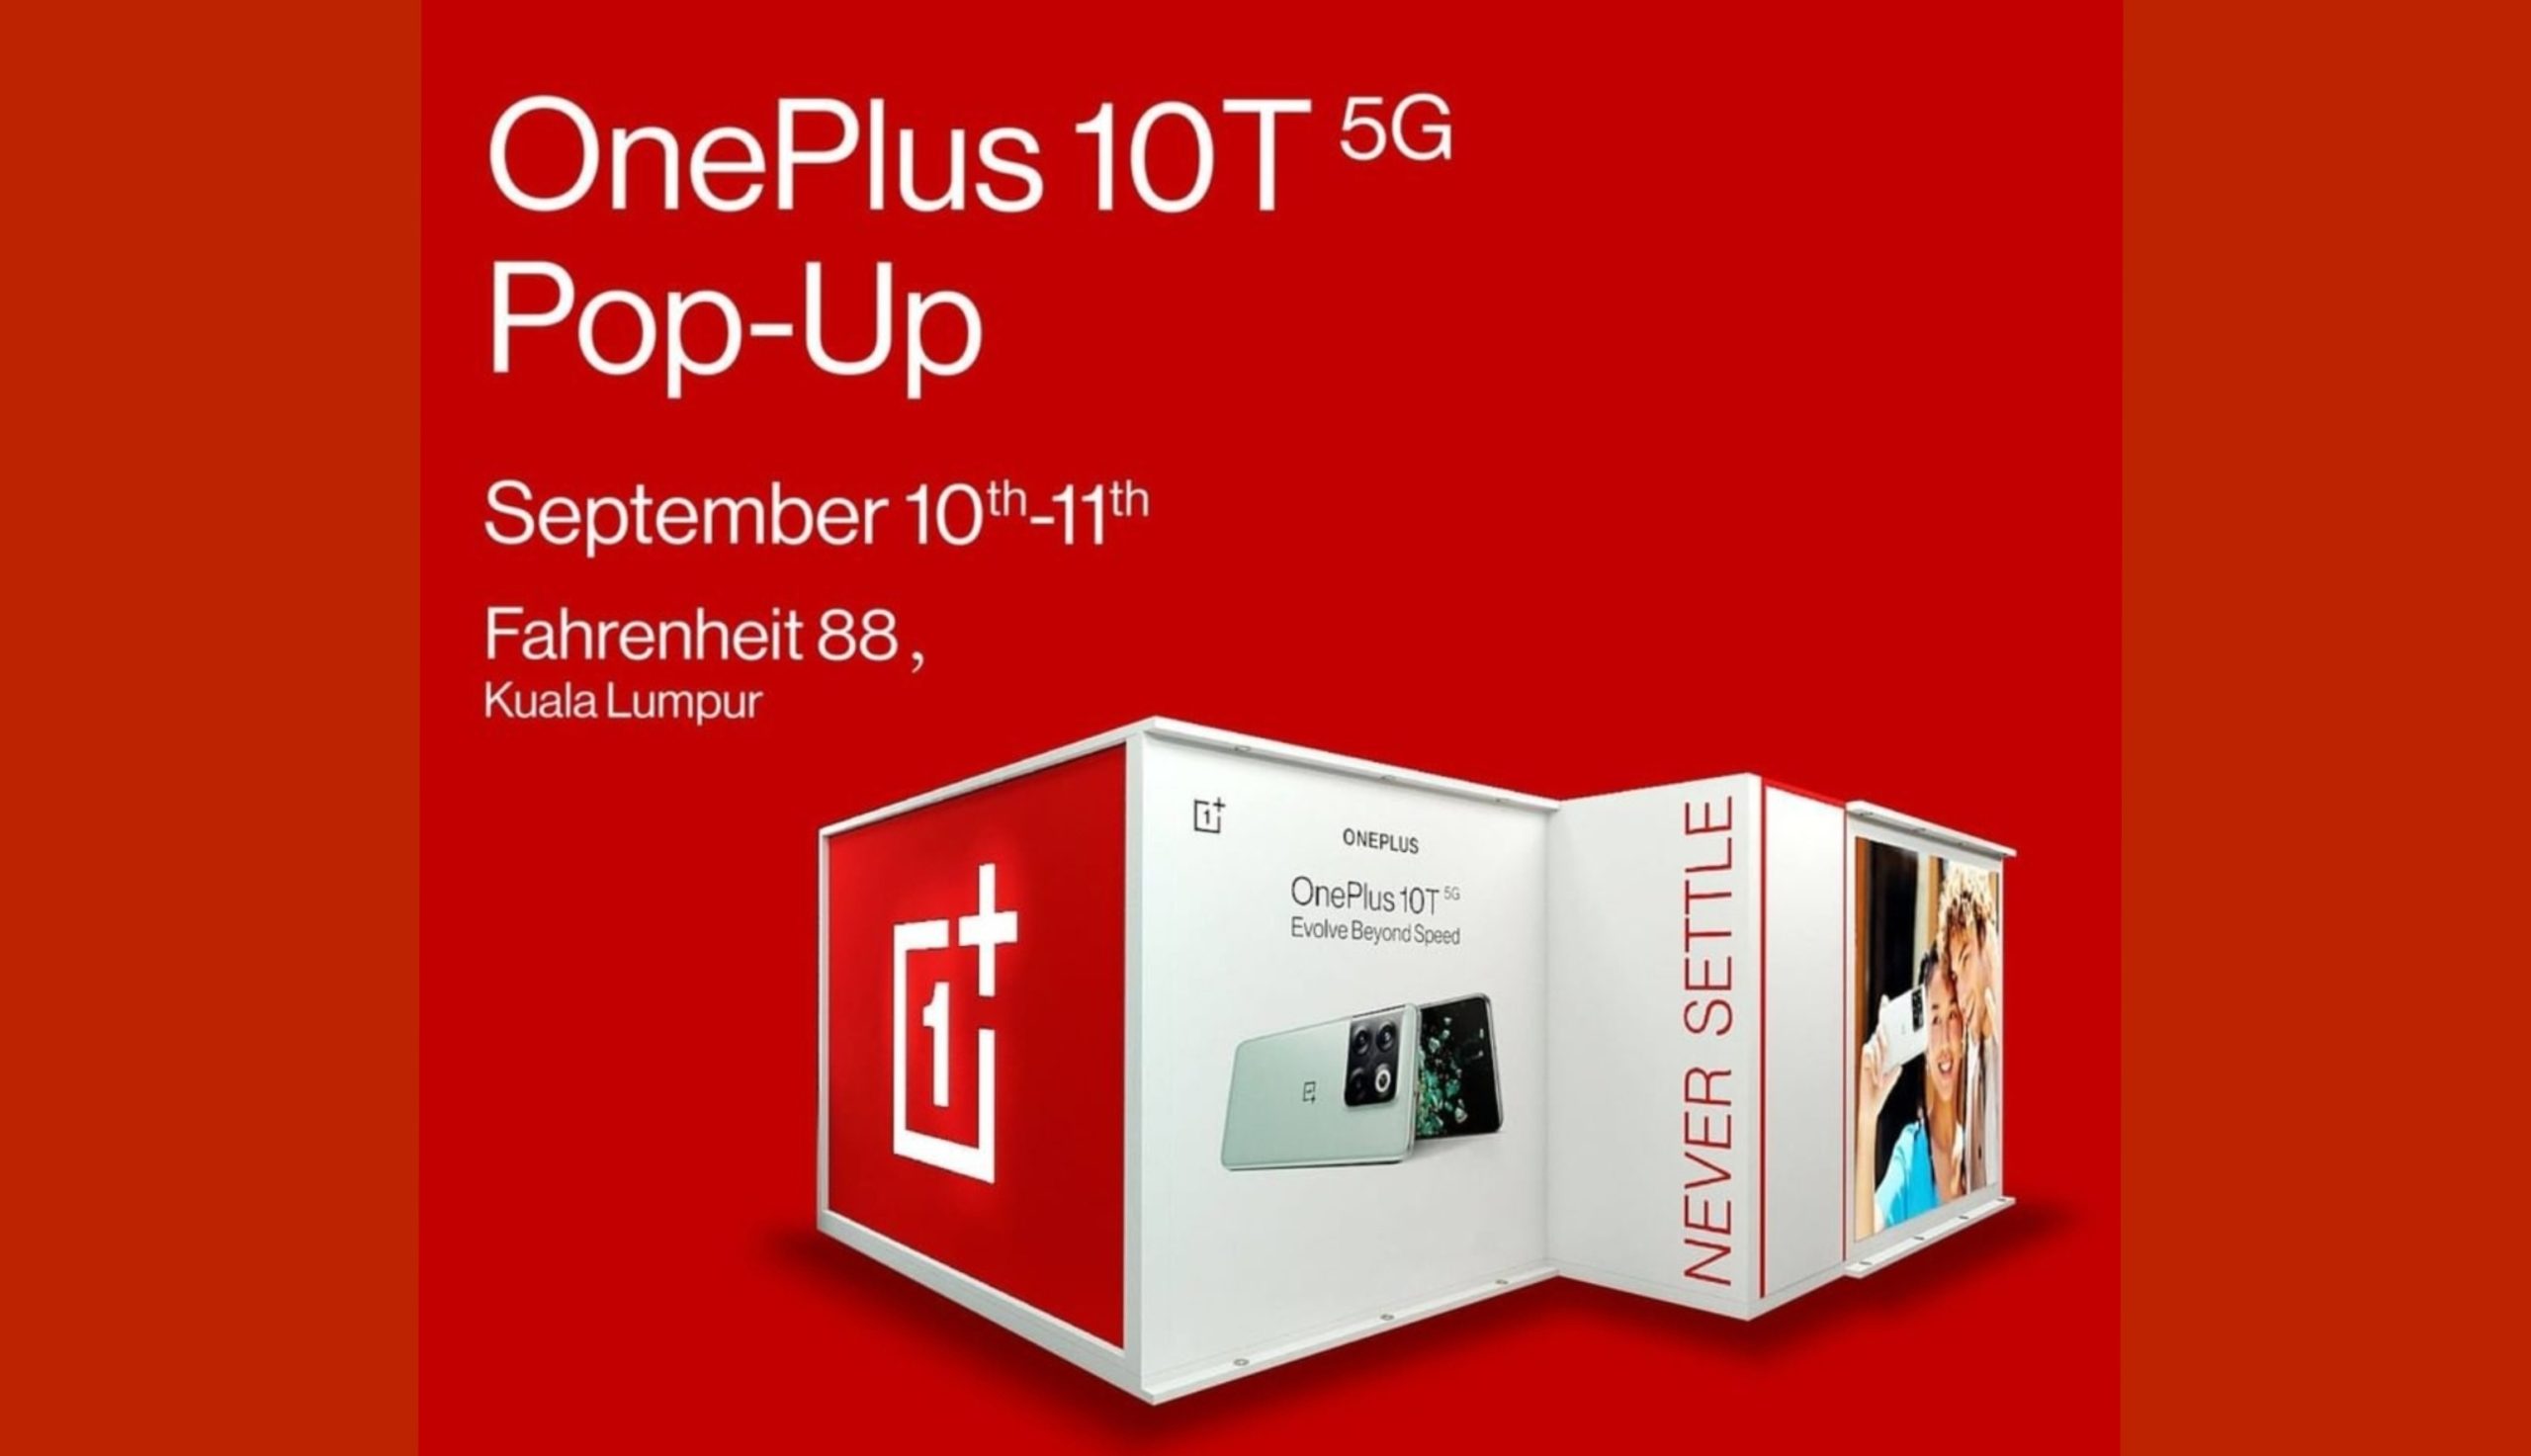 Acara pop-up OnePlus 10T 5G akan berlangsung di Malaysia pada 10-11 September ini 3